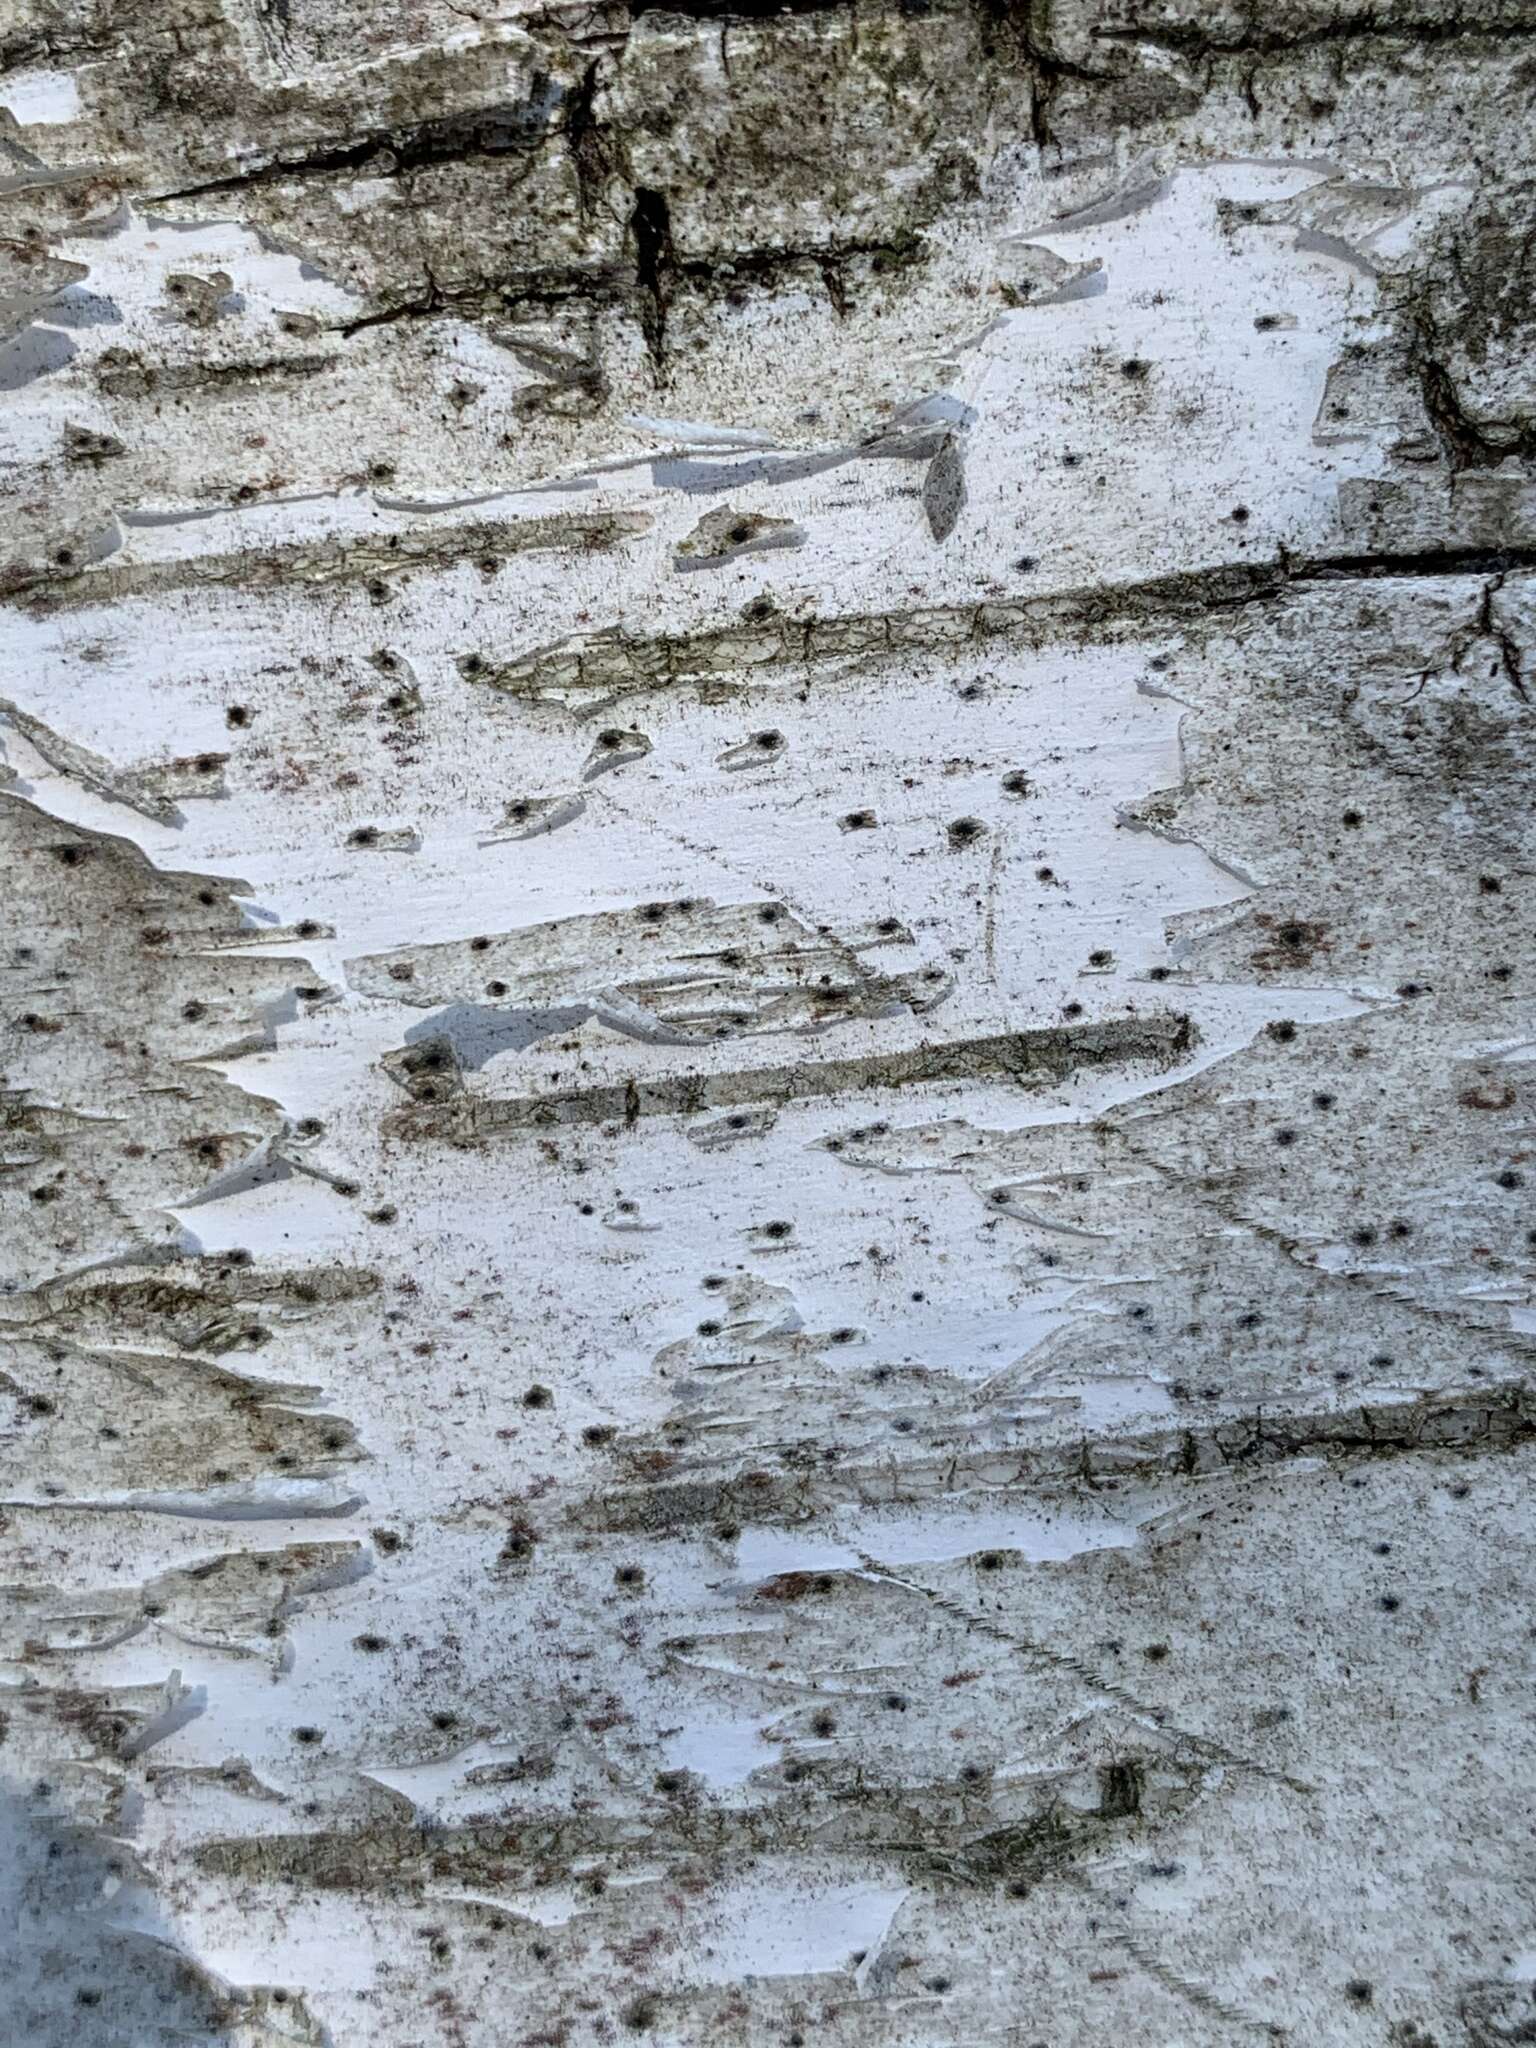 Image of birchbark dot lichen